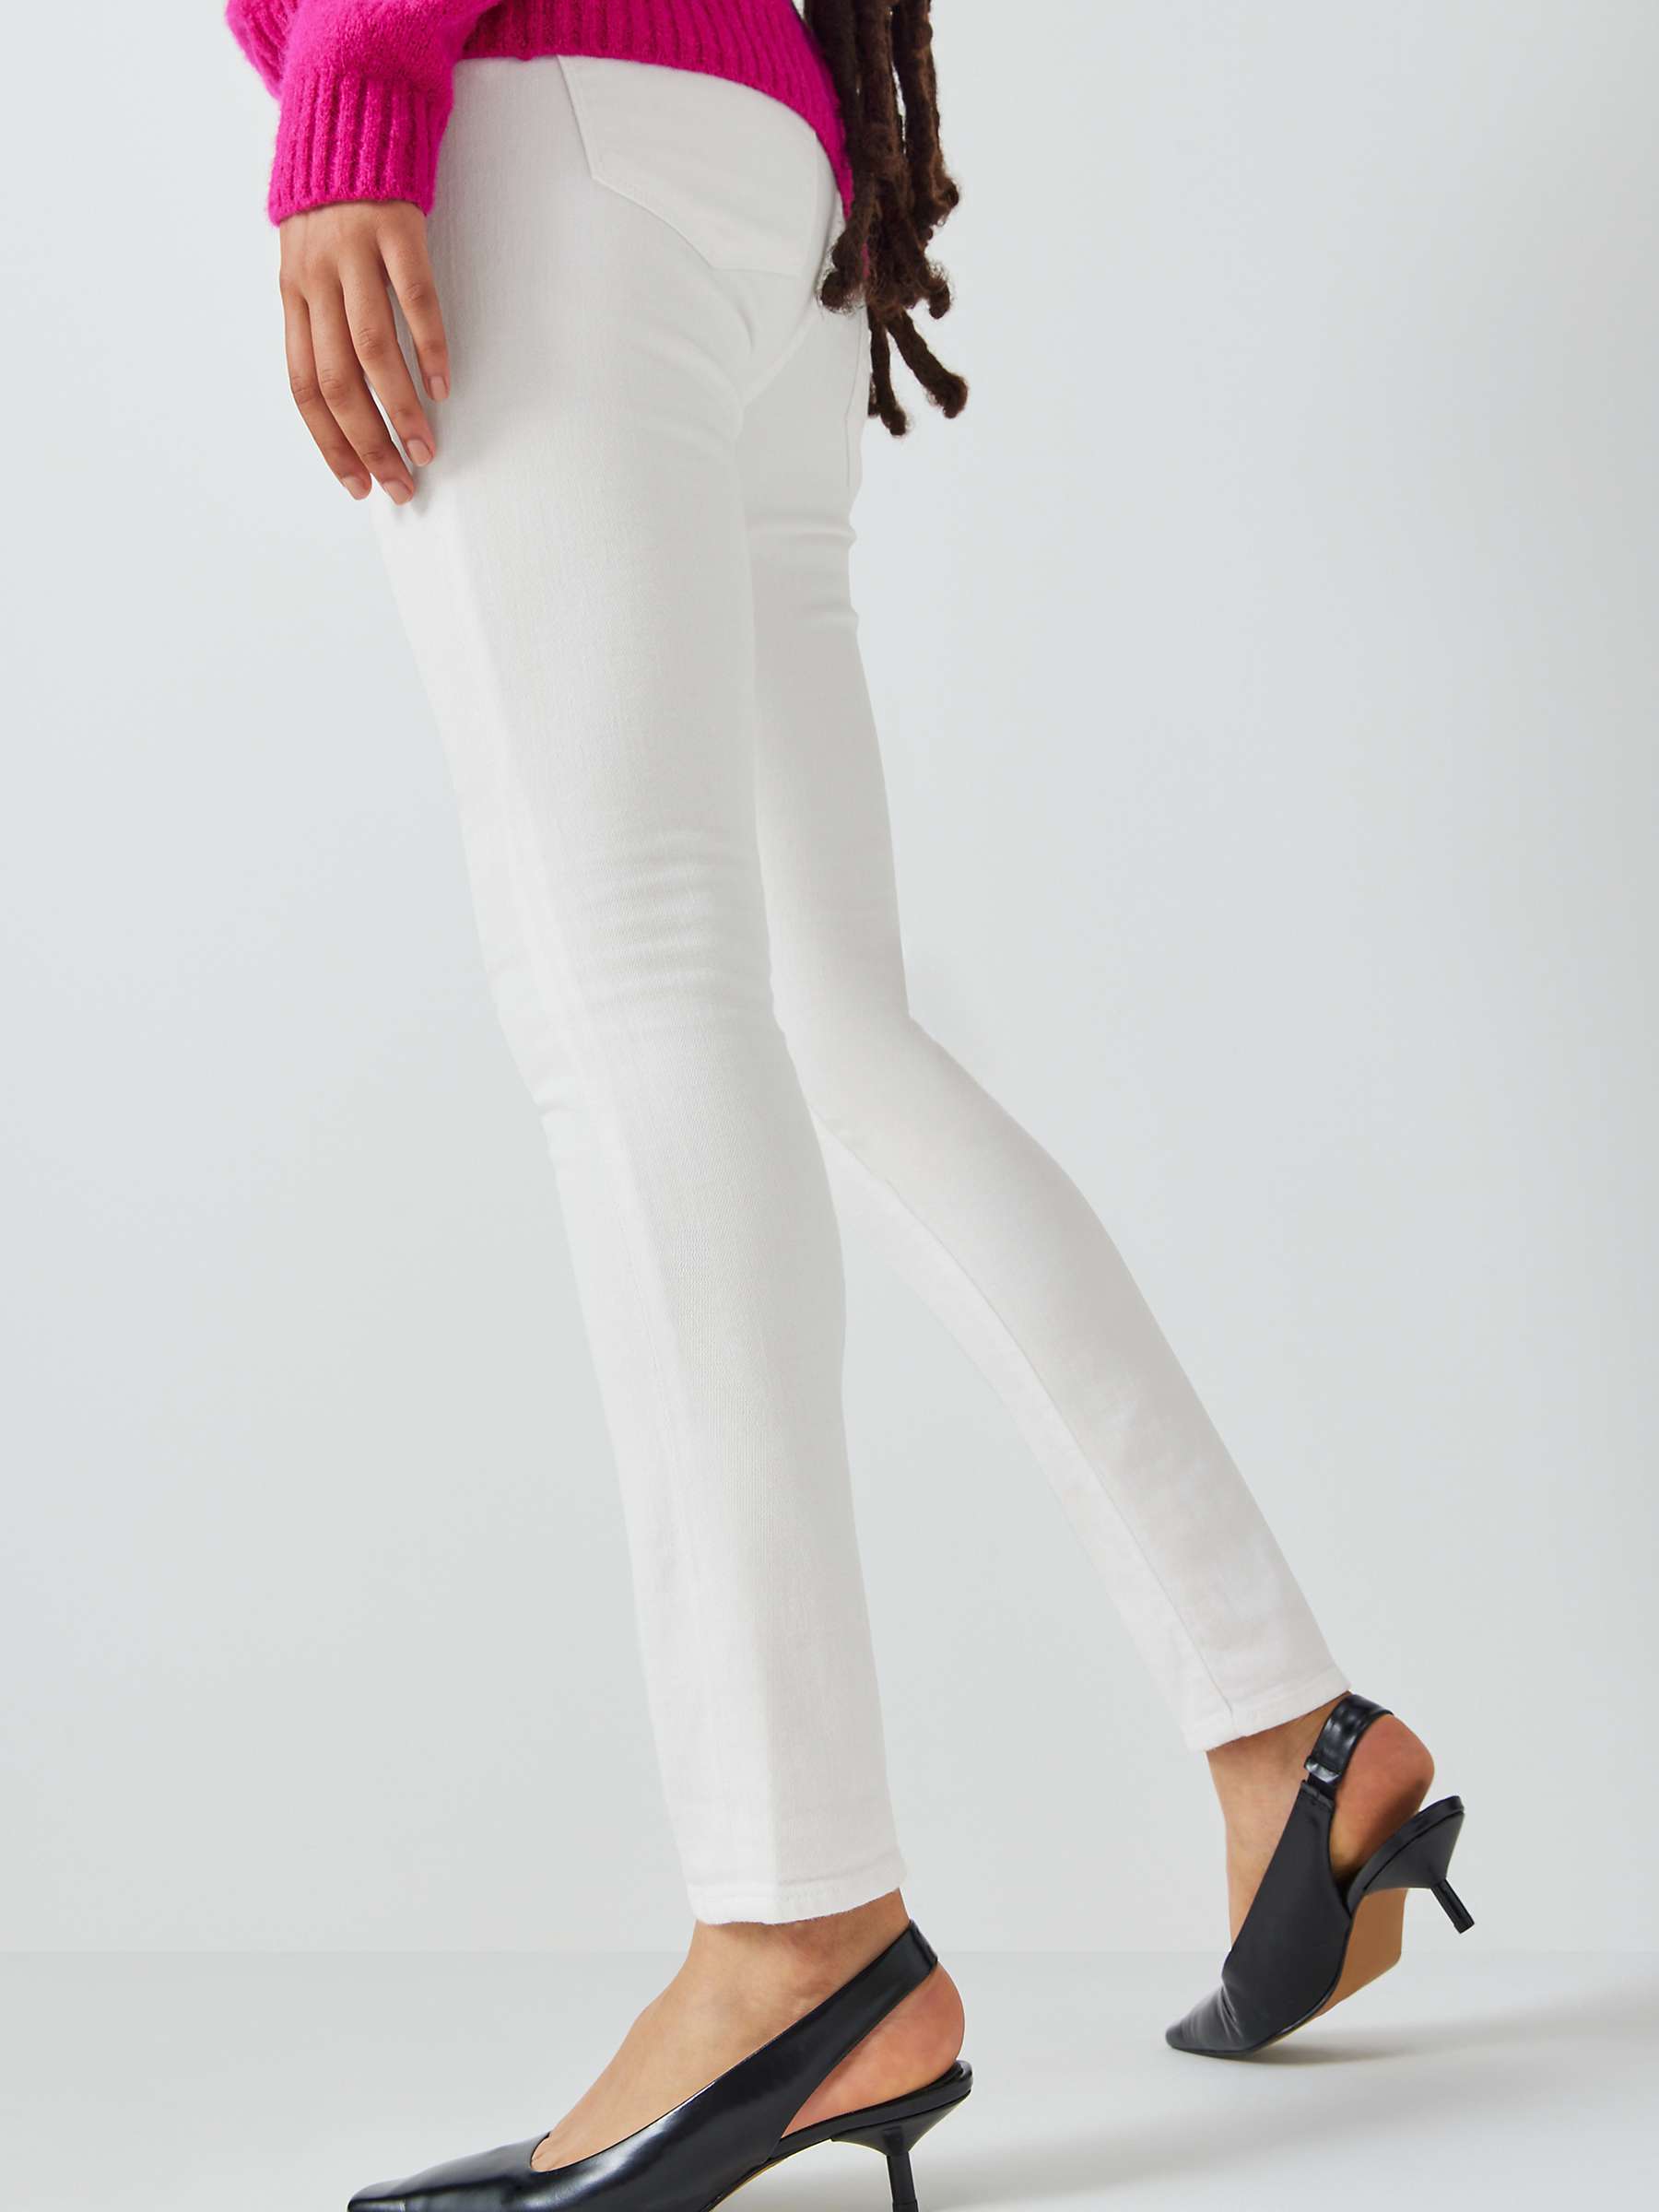 Buy FRAME Le Garcon Boyfriend Jeans, White Online at johnlewis.com